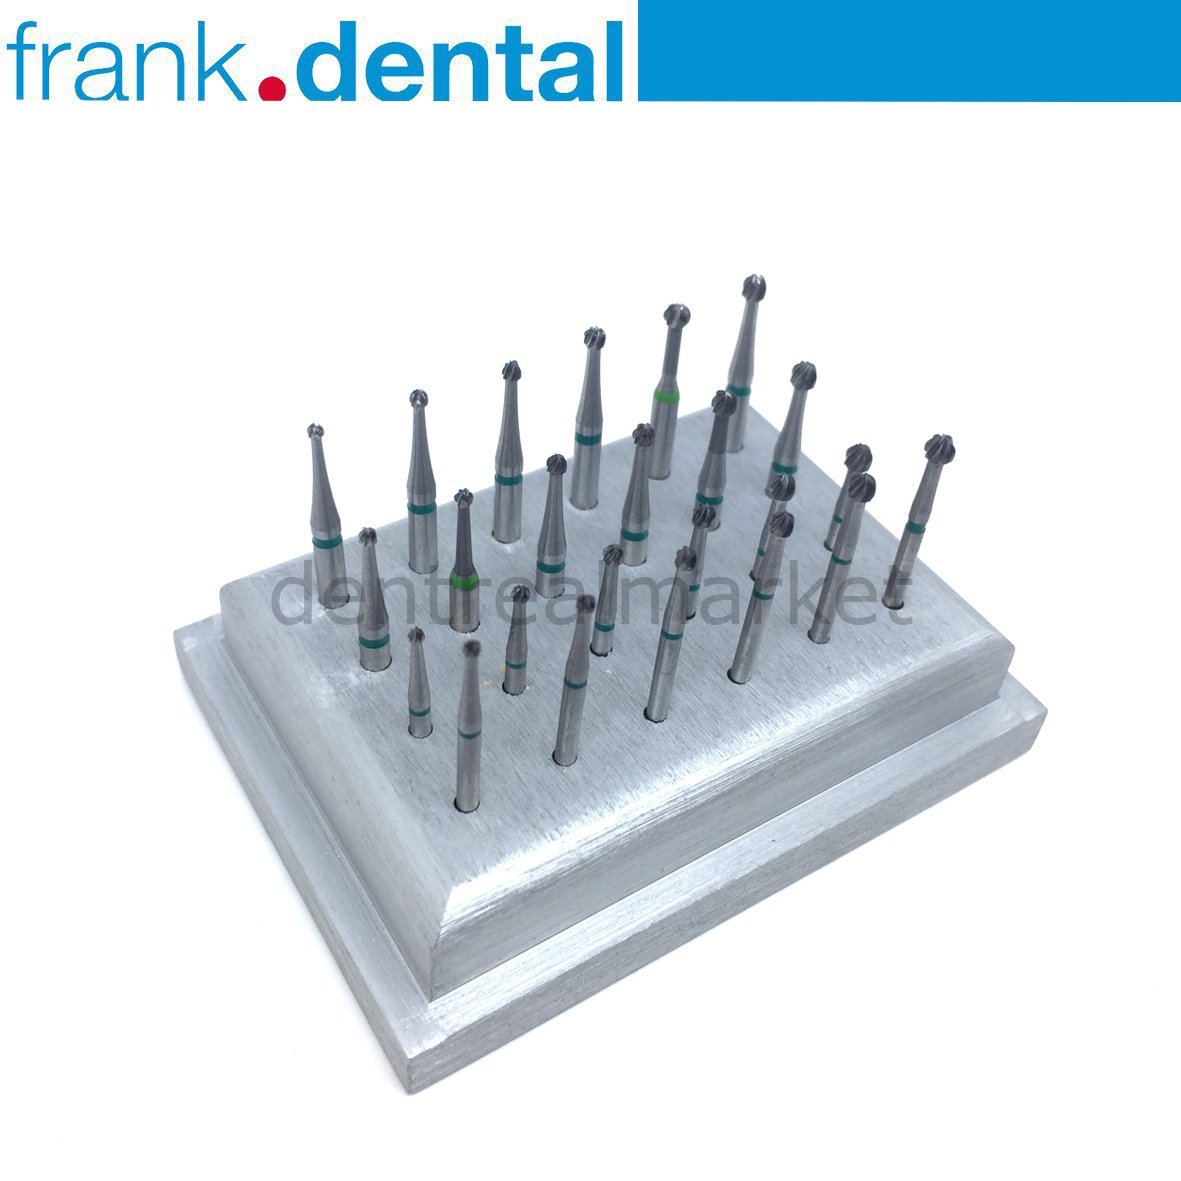 DentrealStore - Frank Dental Tungusten Carpide Burs Set - Contra- Angle & High Speed Handpiece